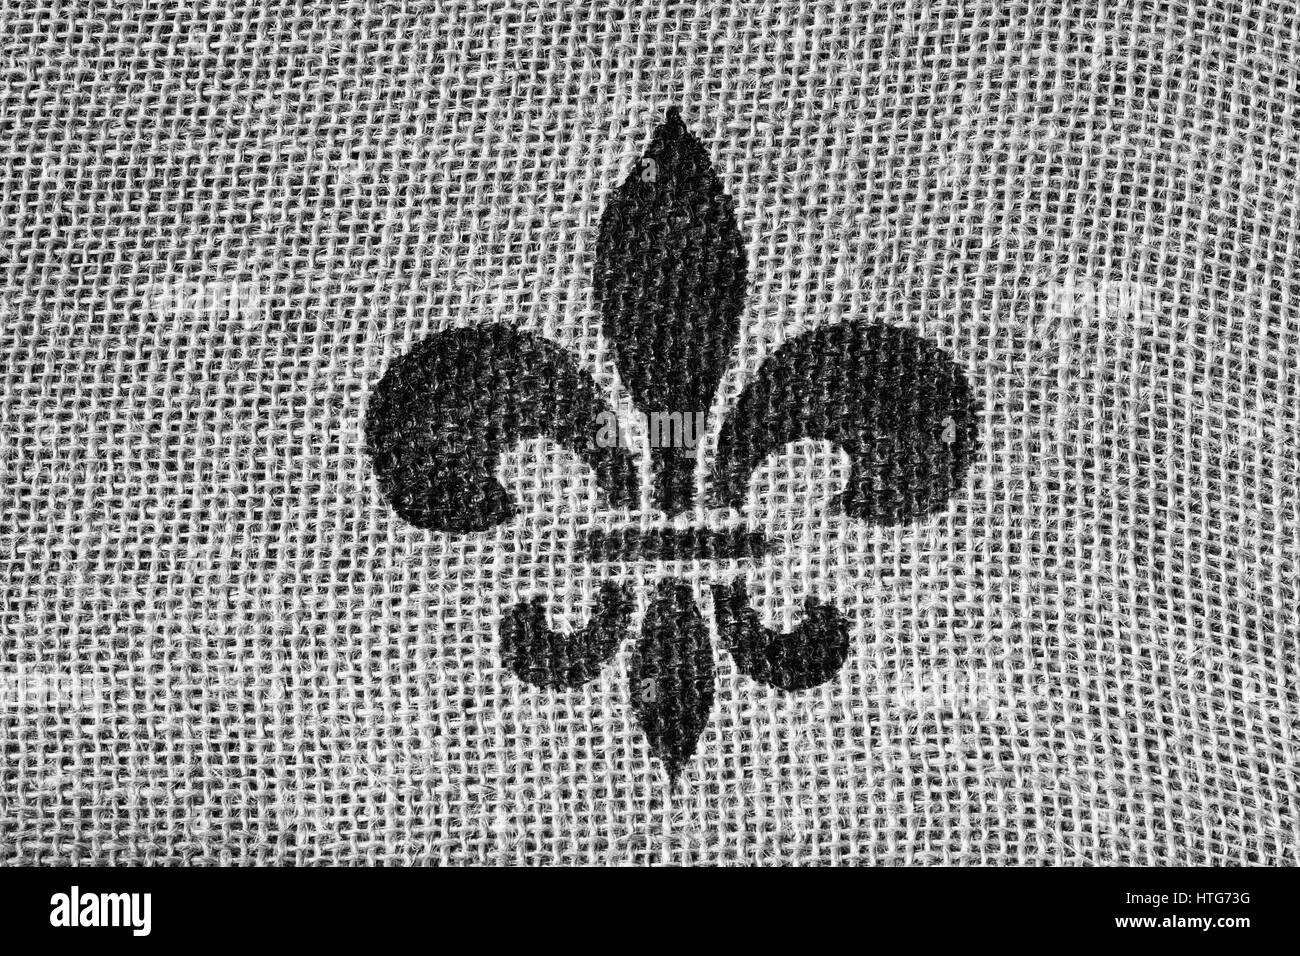 Fleur de Lis on Burlap in Black and White Stock Photo - Alamy